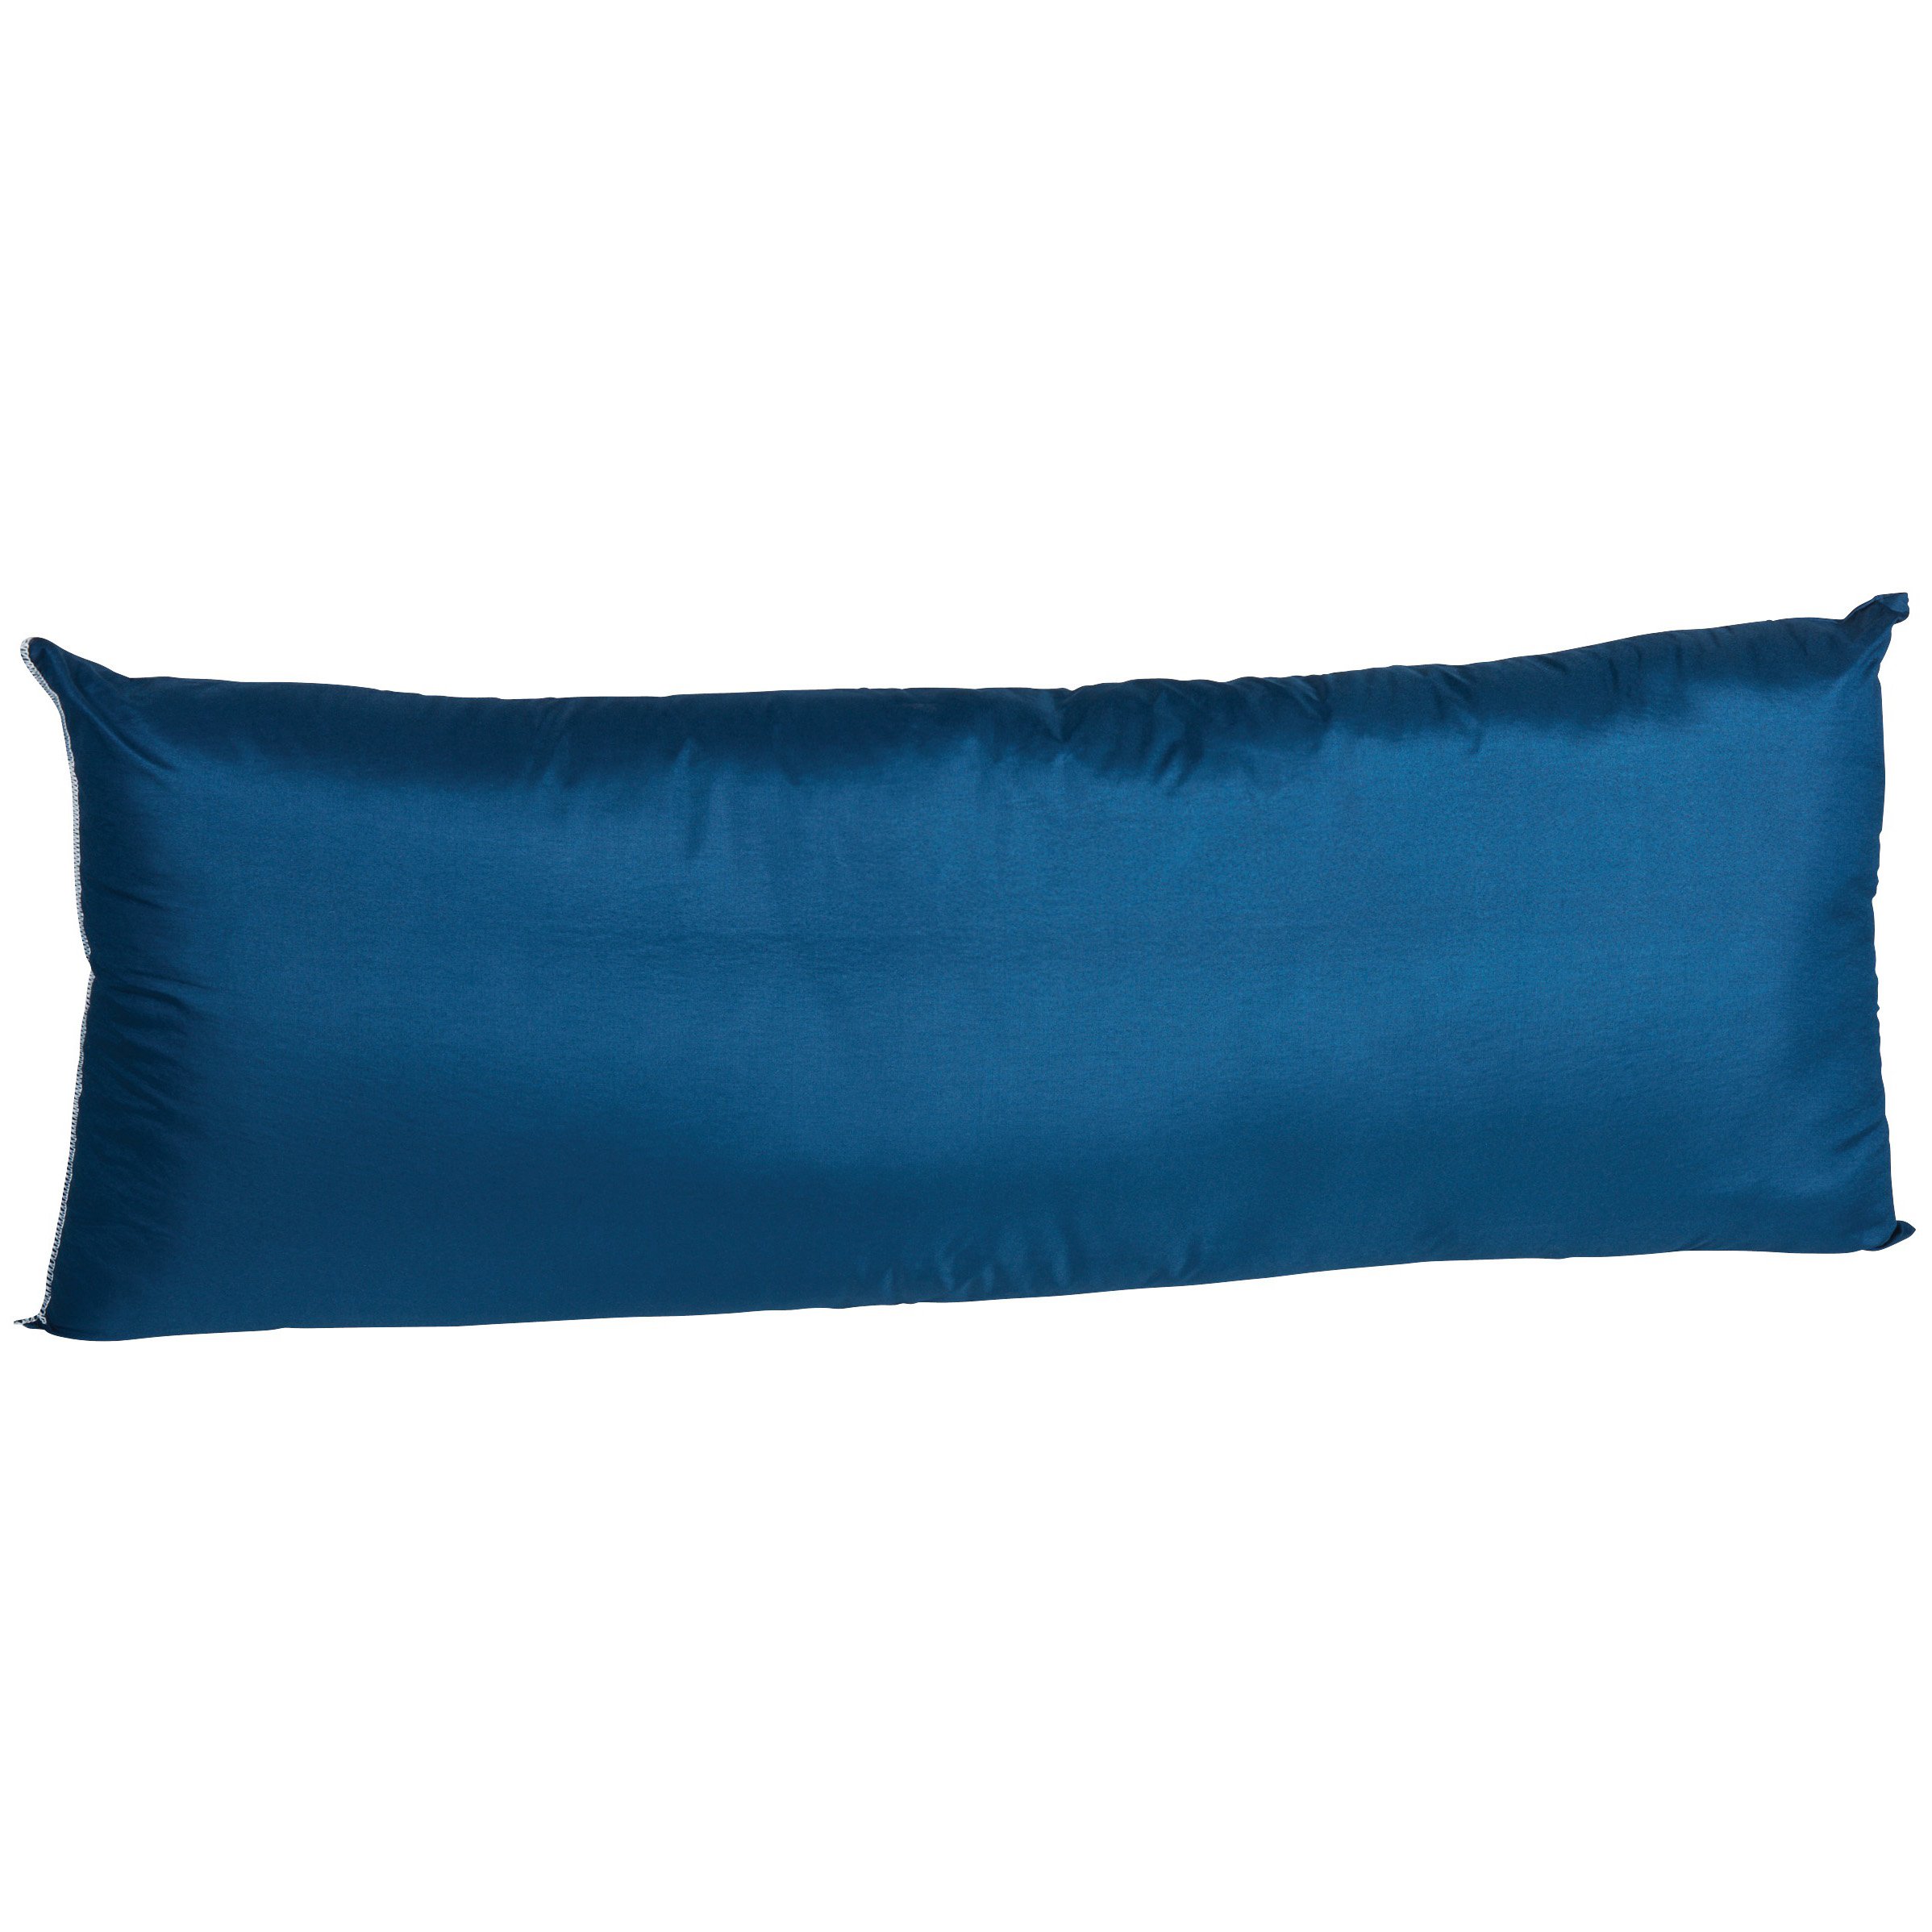 navy body pillow